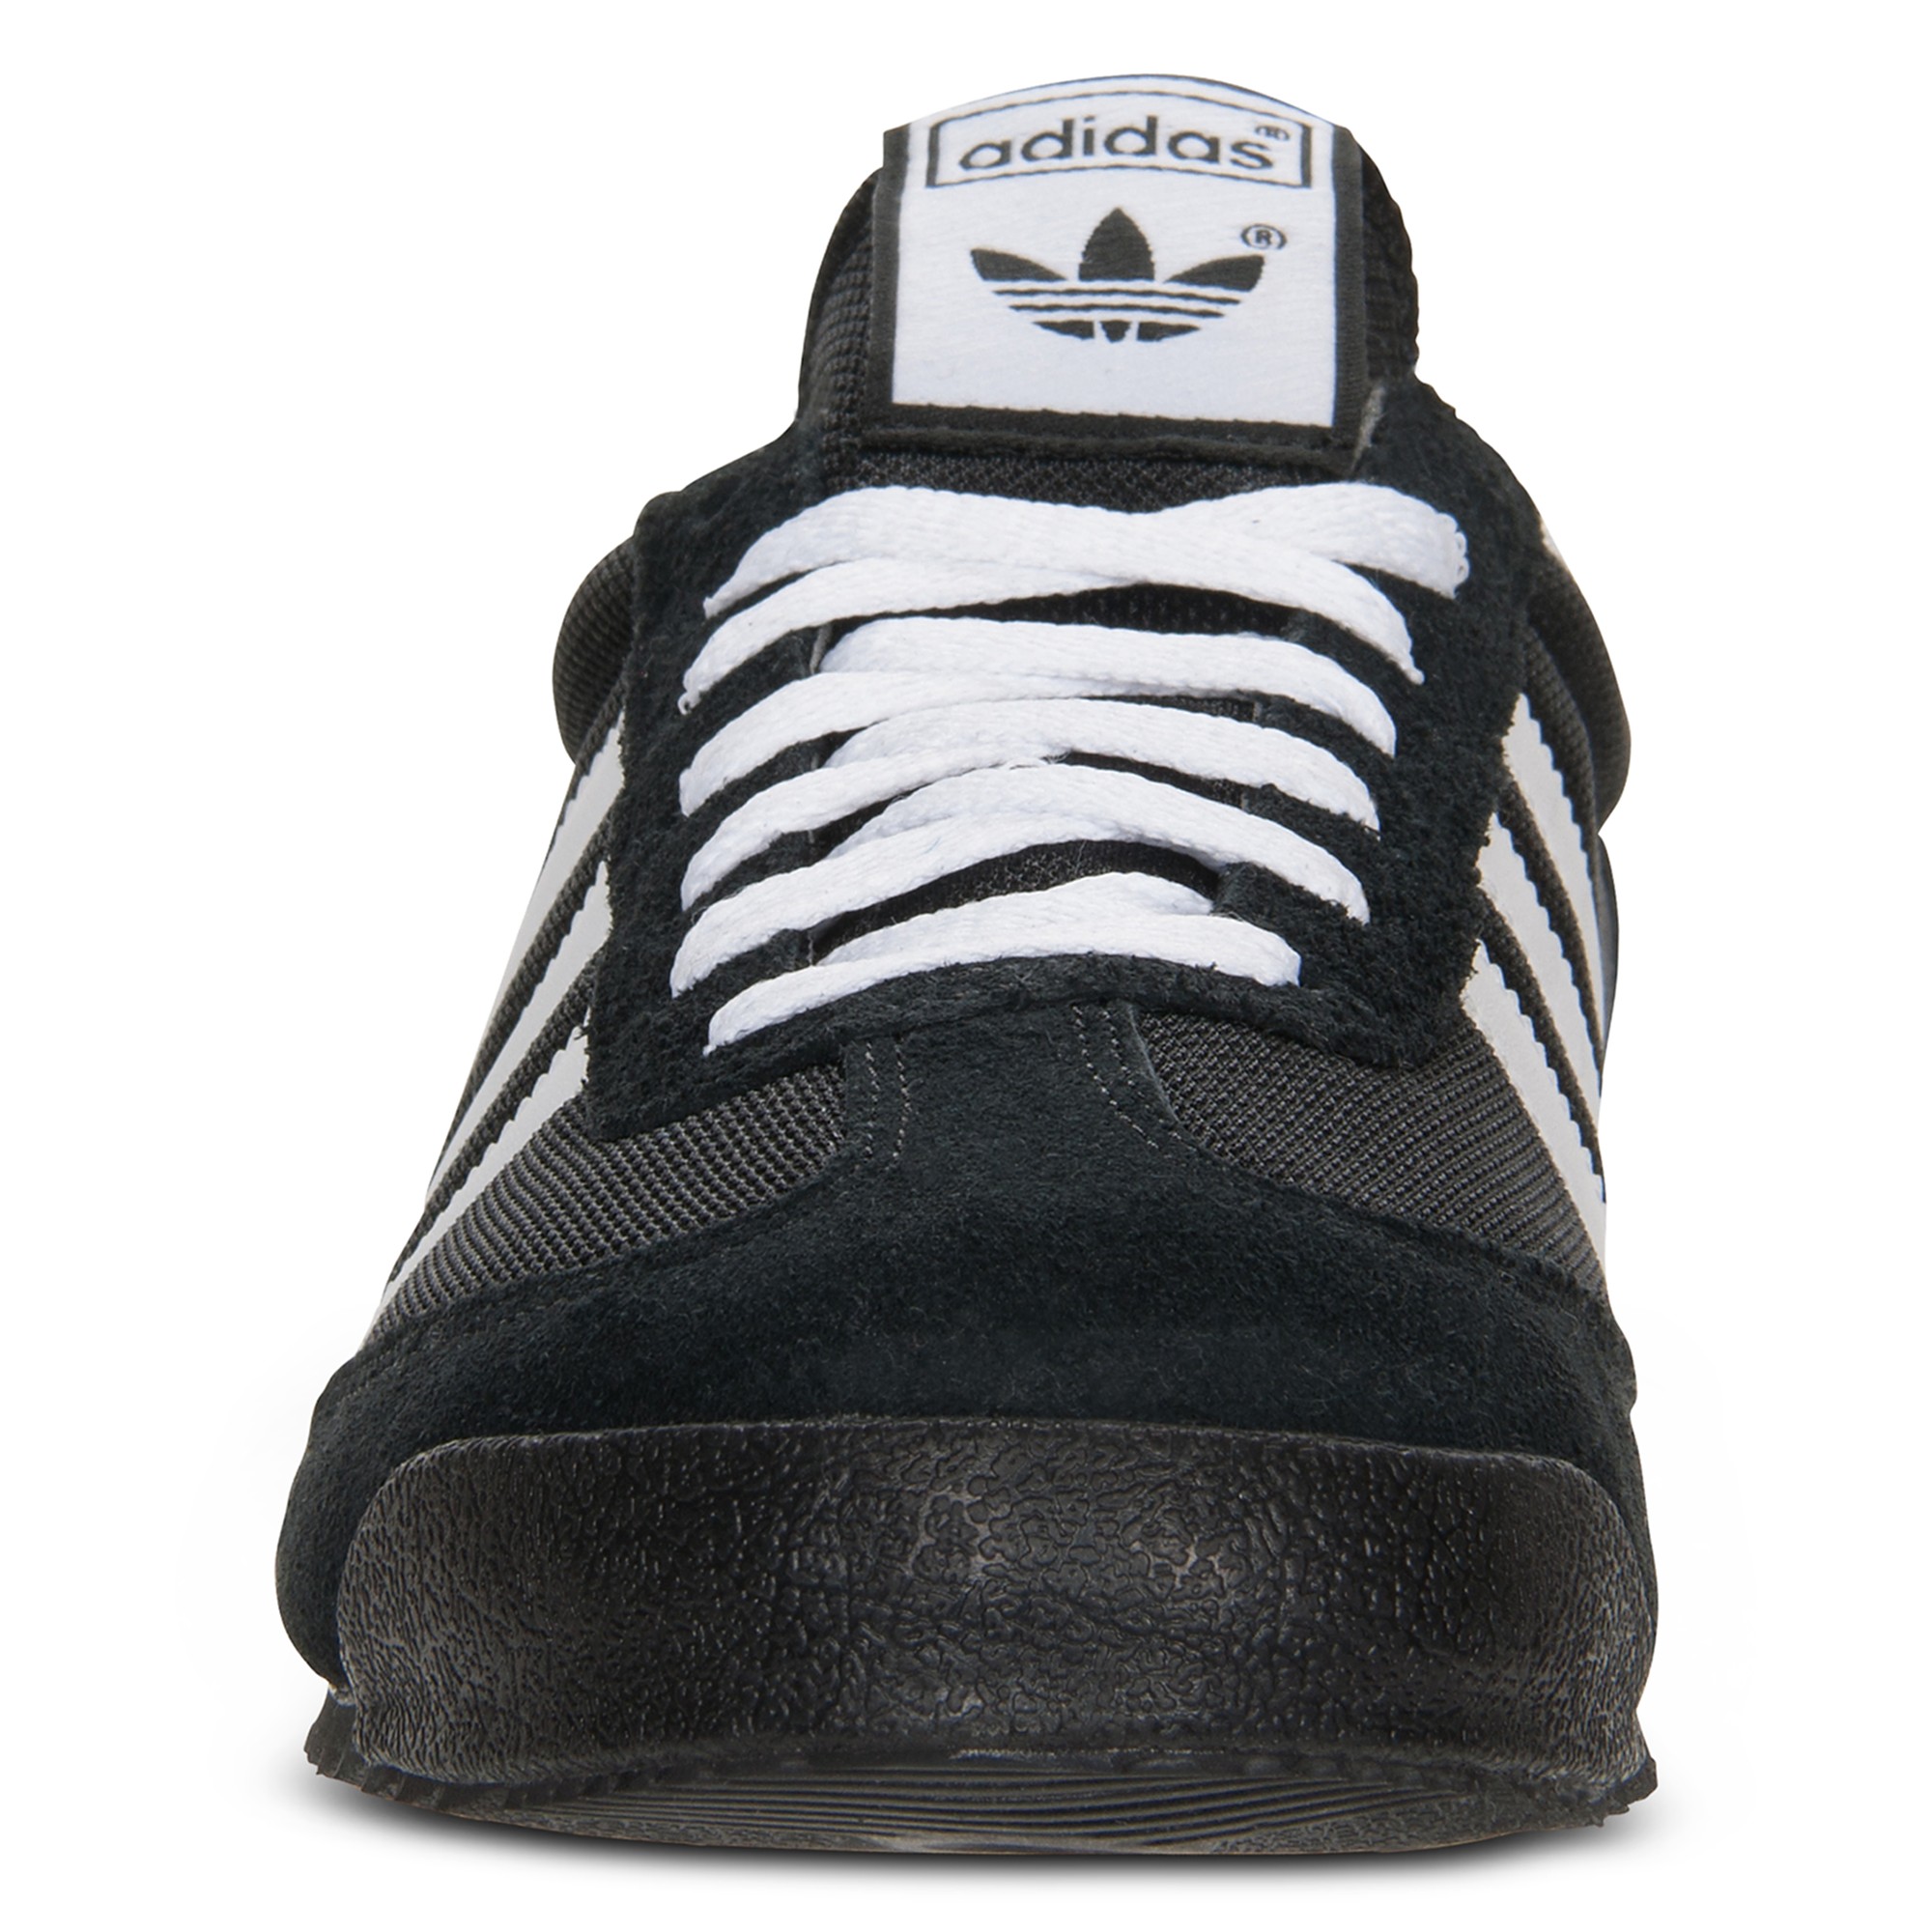 Lyst - adidas Dragon Sneakers in Black for Men